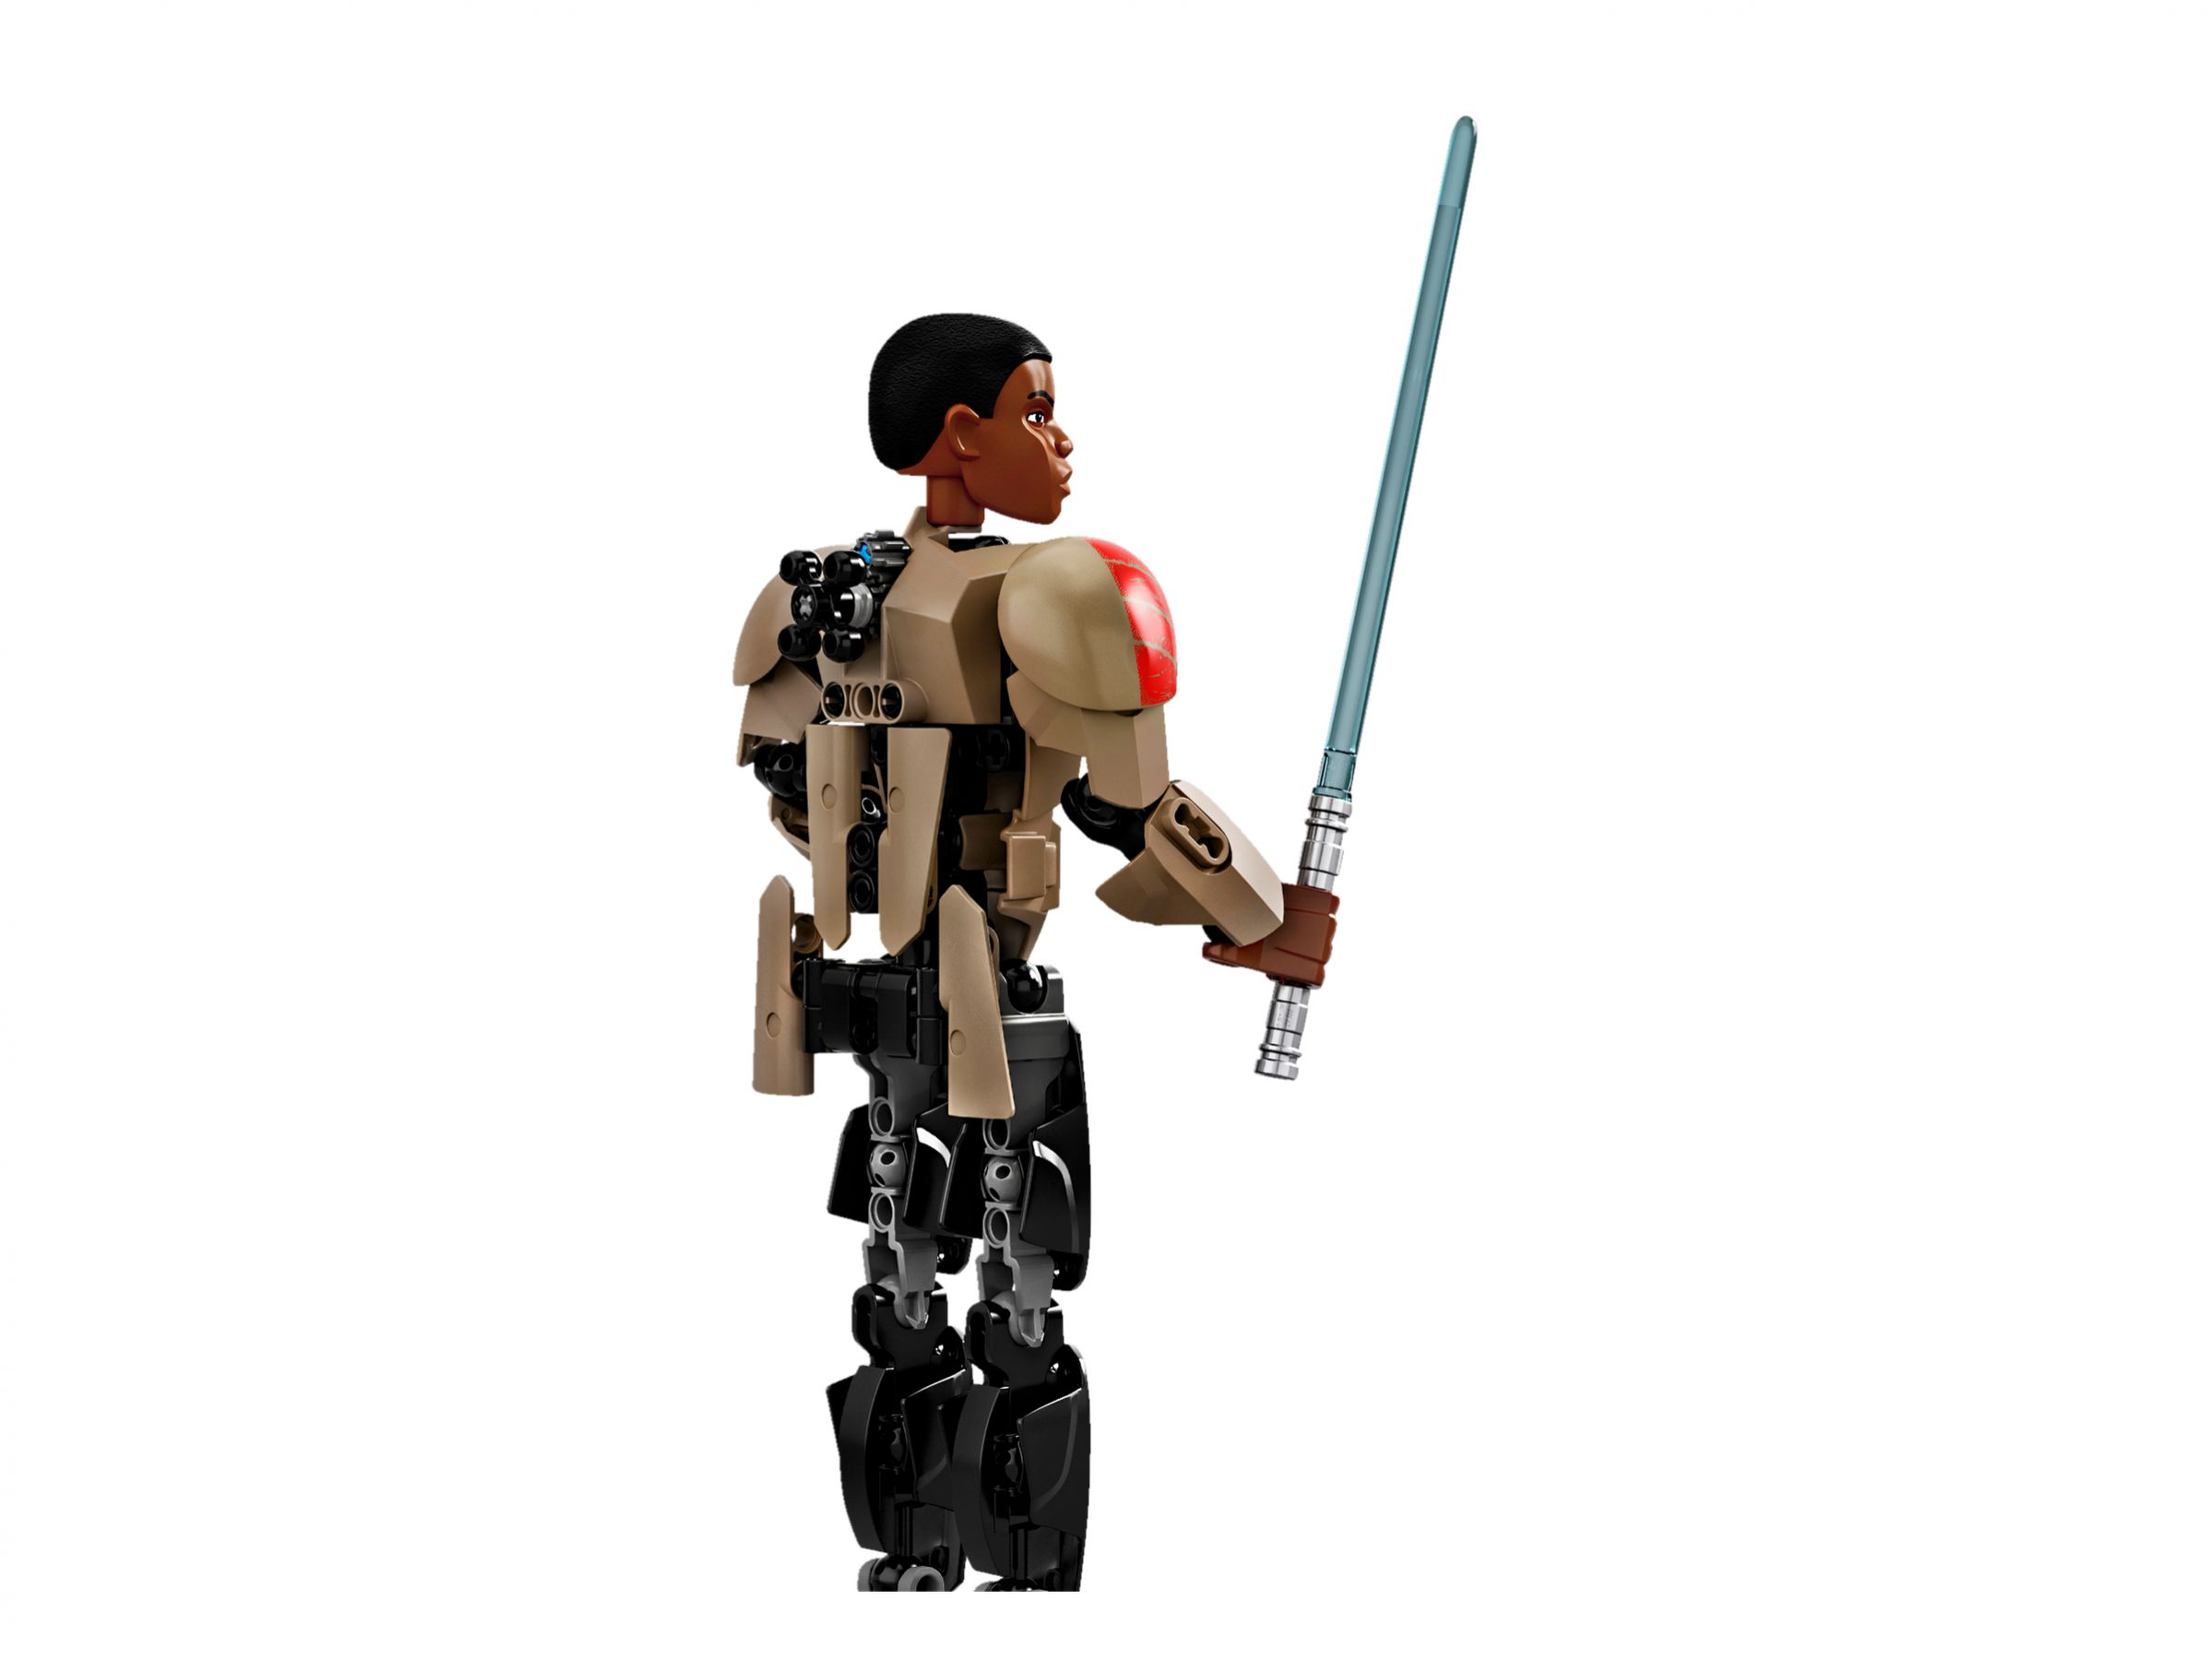 LEGO Star Wars Buildable Figures 75116 Finn LEGO_75116_alt4.jpg